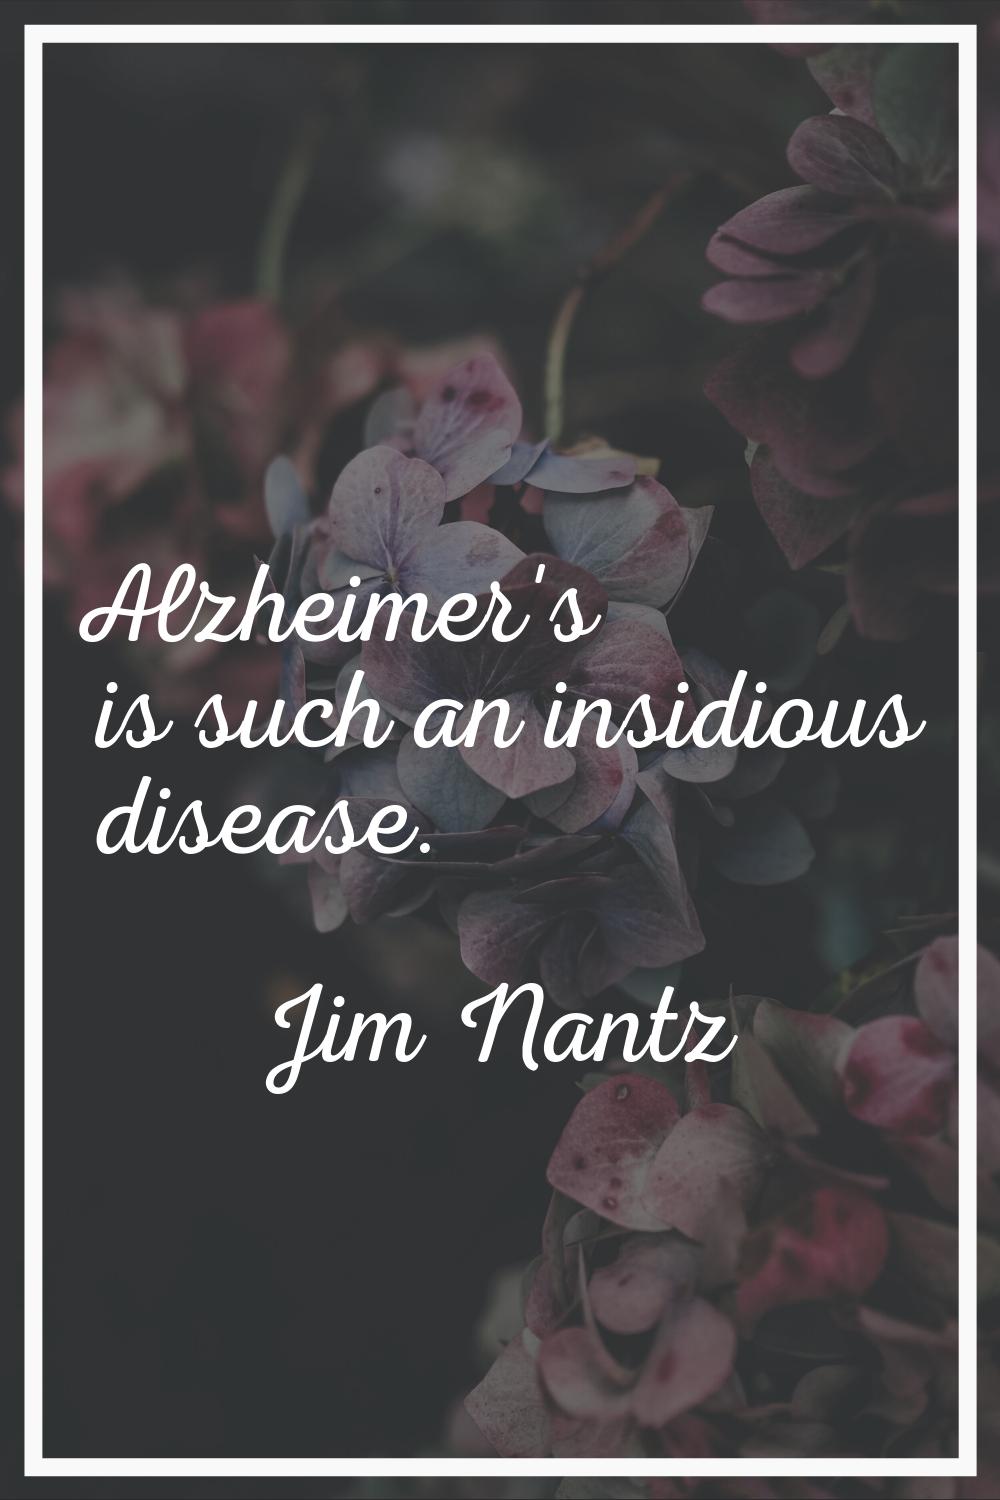 Alzheimer's is such an insidious disease.